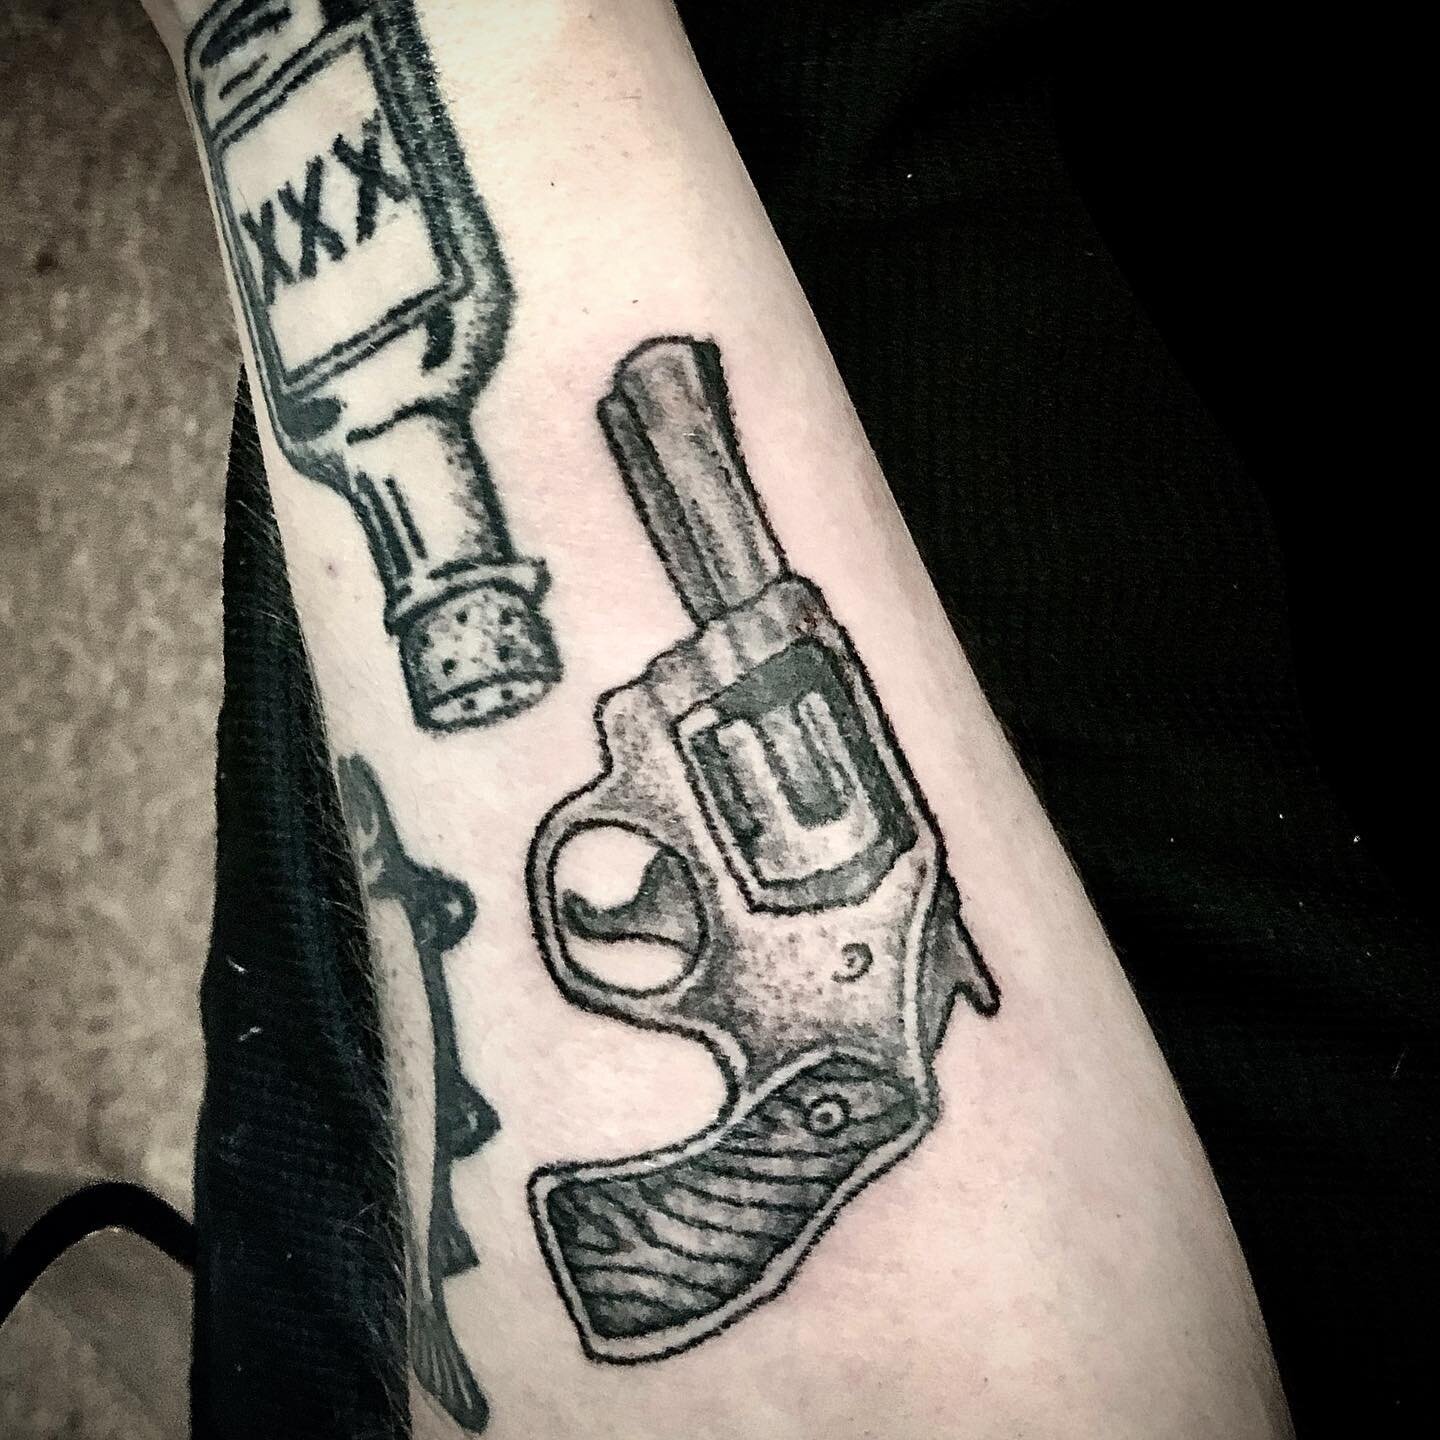 Hand poked revolver. 
&bull;
&bull;
&bull;
&bull;
#tattoo #tatooartist #handpoke #handpokedtattoo #handpokedtats #handpoked #handpokedtattoos #handpokedesigns #chicagotattoo #chicagotattooartist #traditionalart #traditionaltattoo #guntattoo #revolver